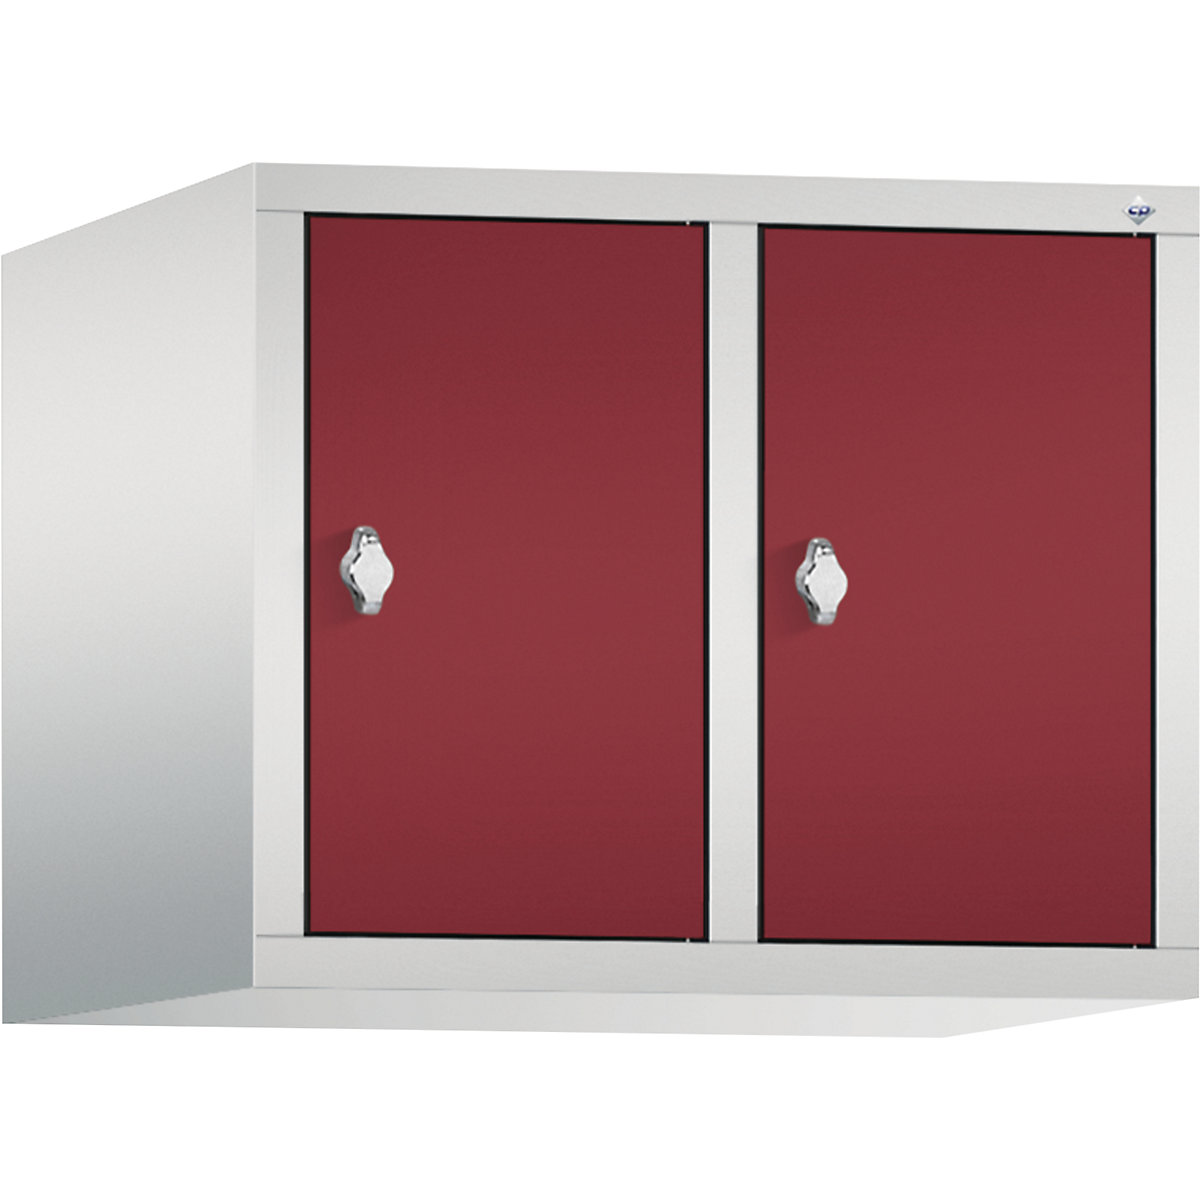 C+P – Altillo CLASSIC, 2 compartimentos, anchura de compartimento 300 mm, gris luminoso / rojo rubí